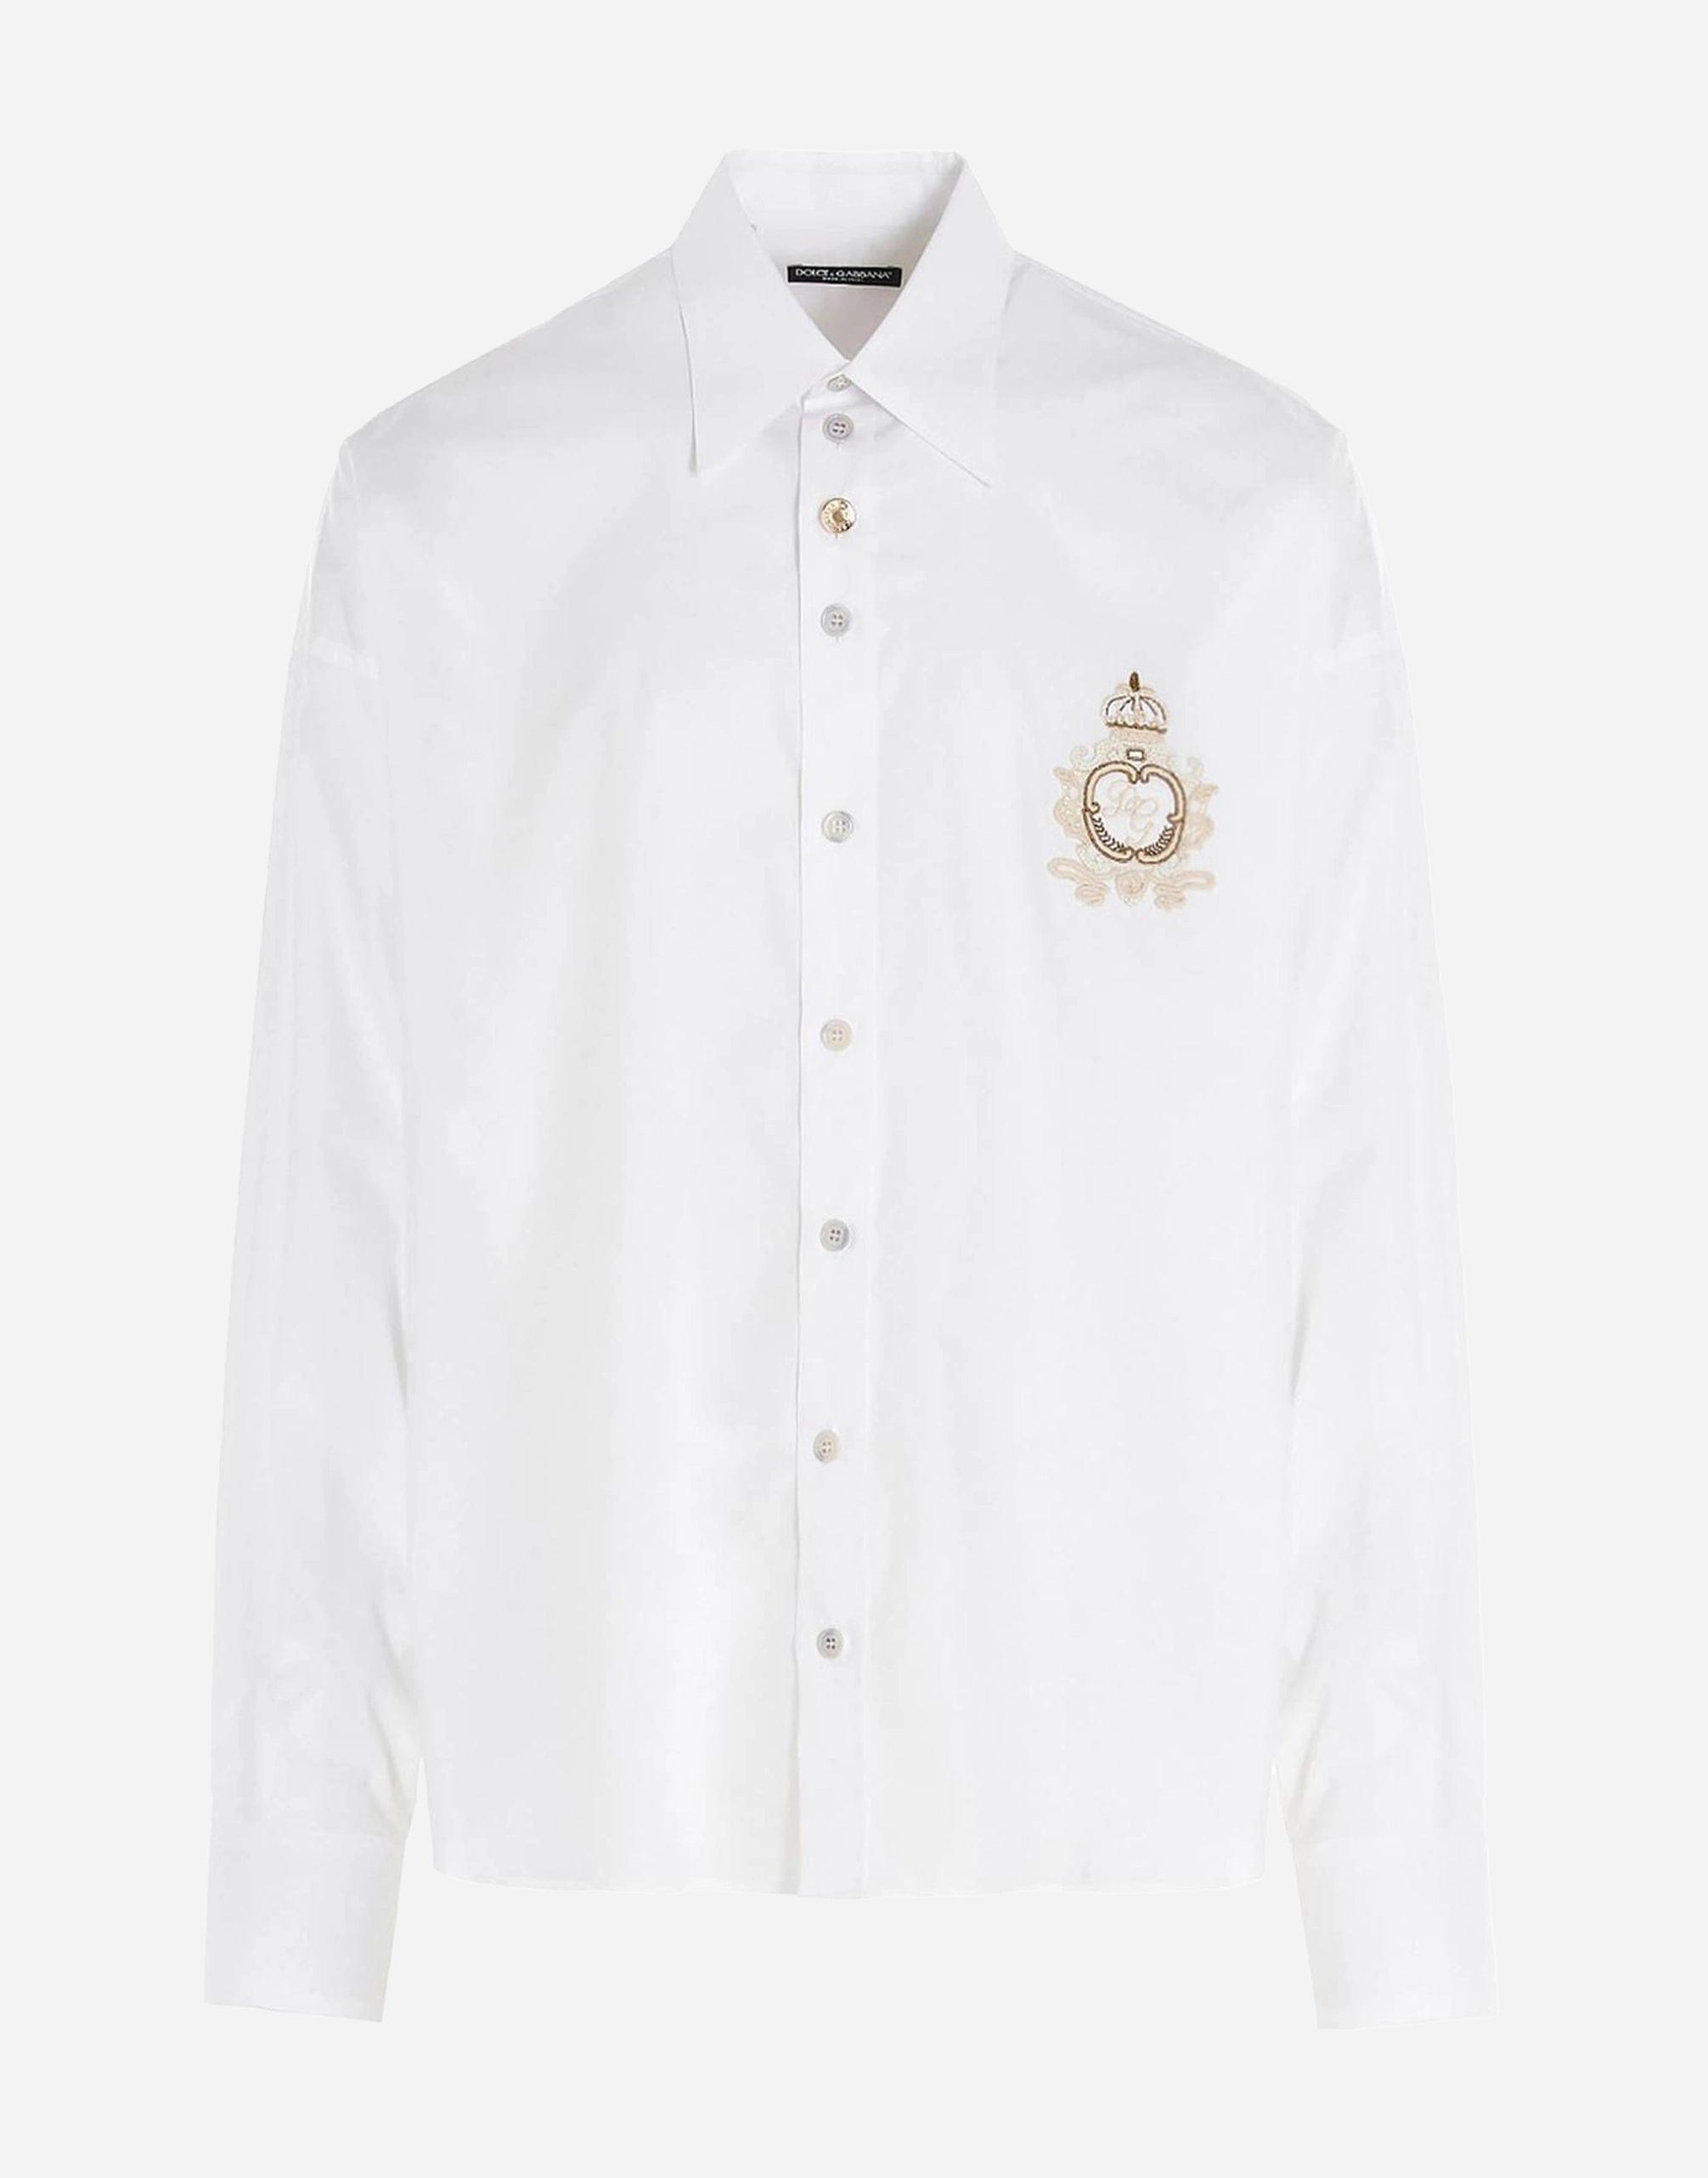 Dolce & Gabbana Cotton Shirt With DG Patch